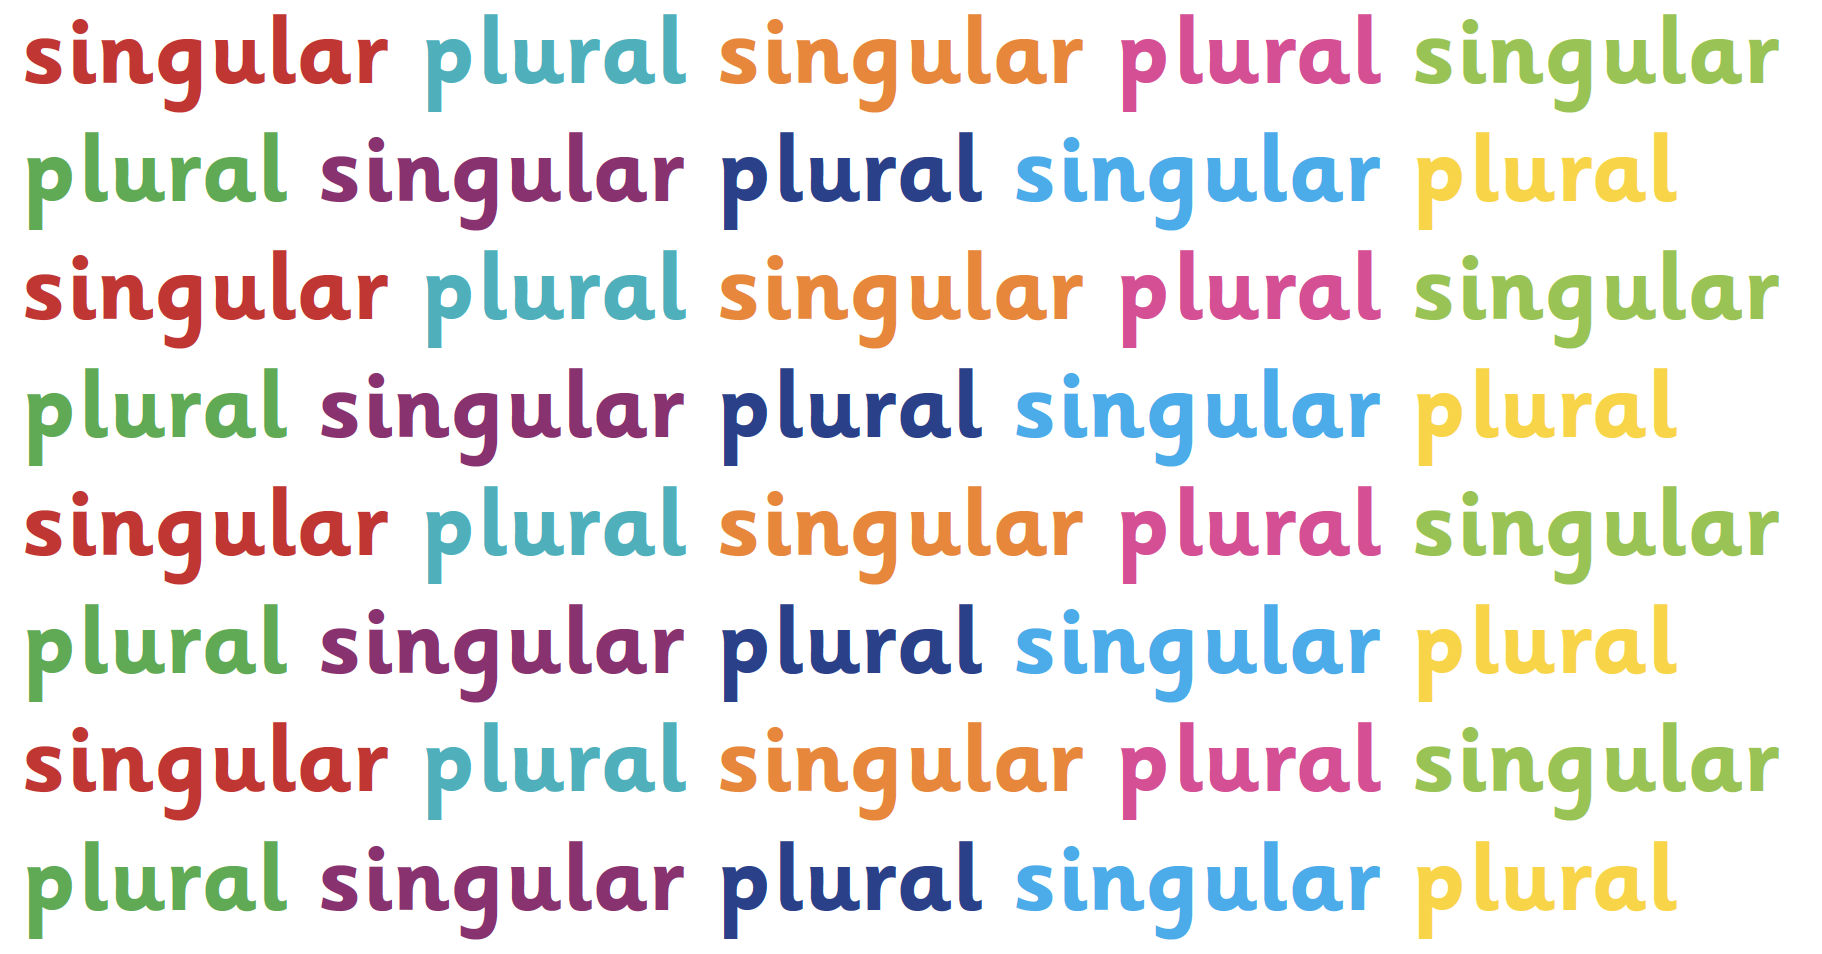 singular-plural-examples-english-grammar-ielts-exams